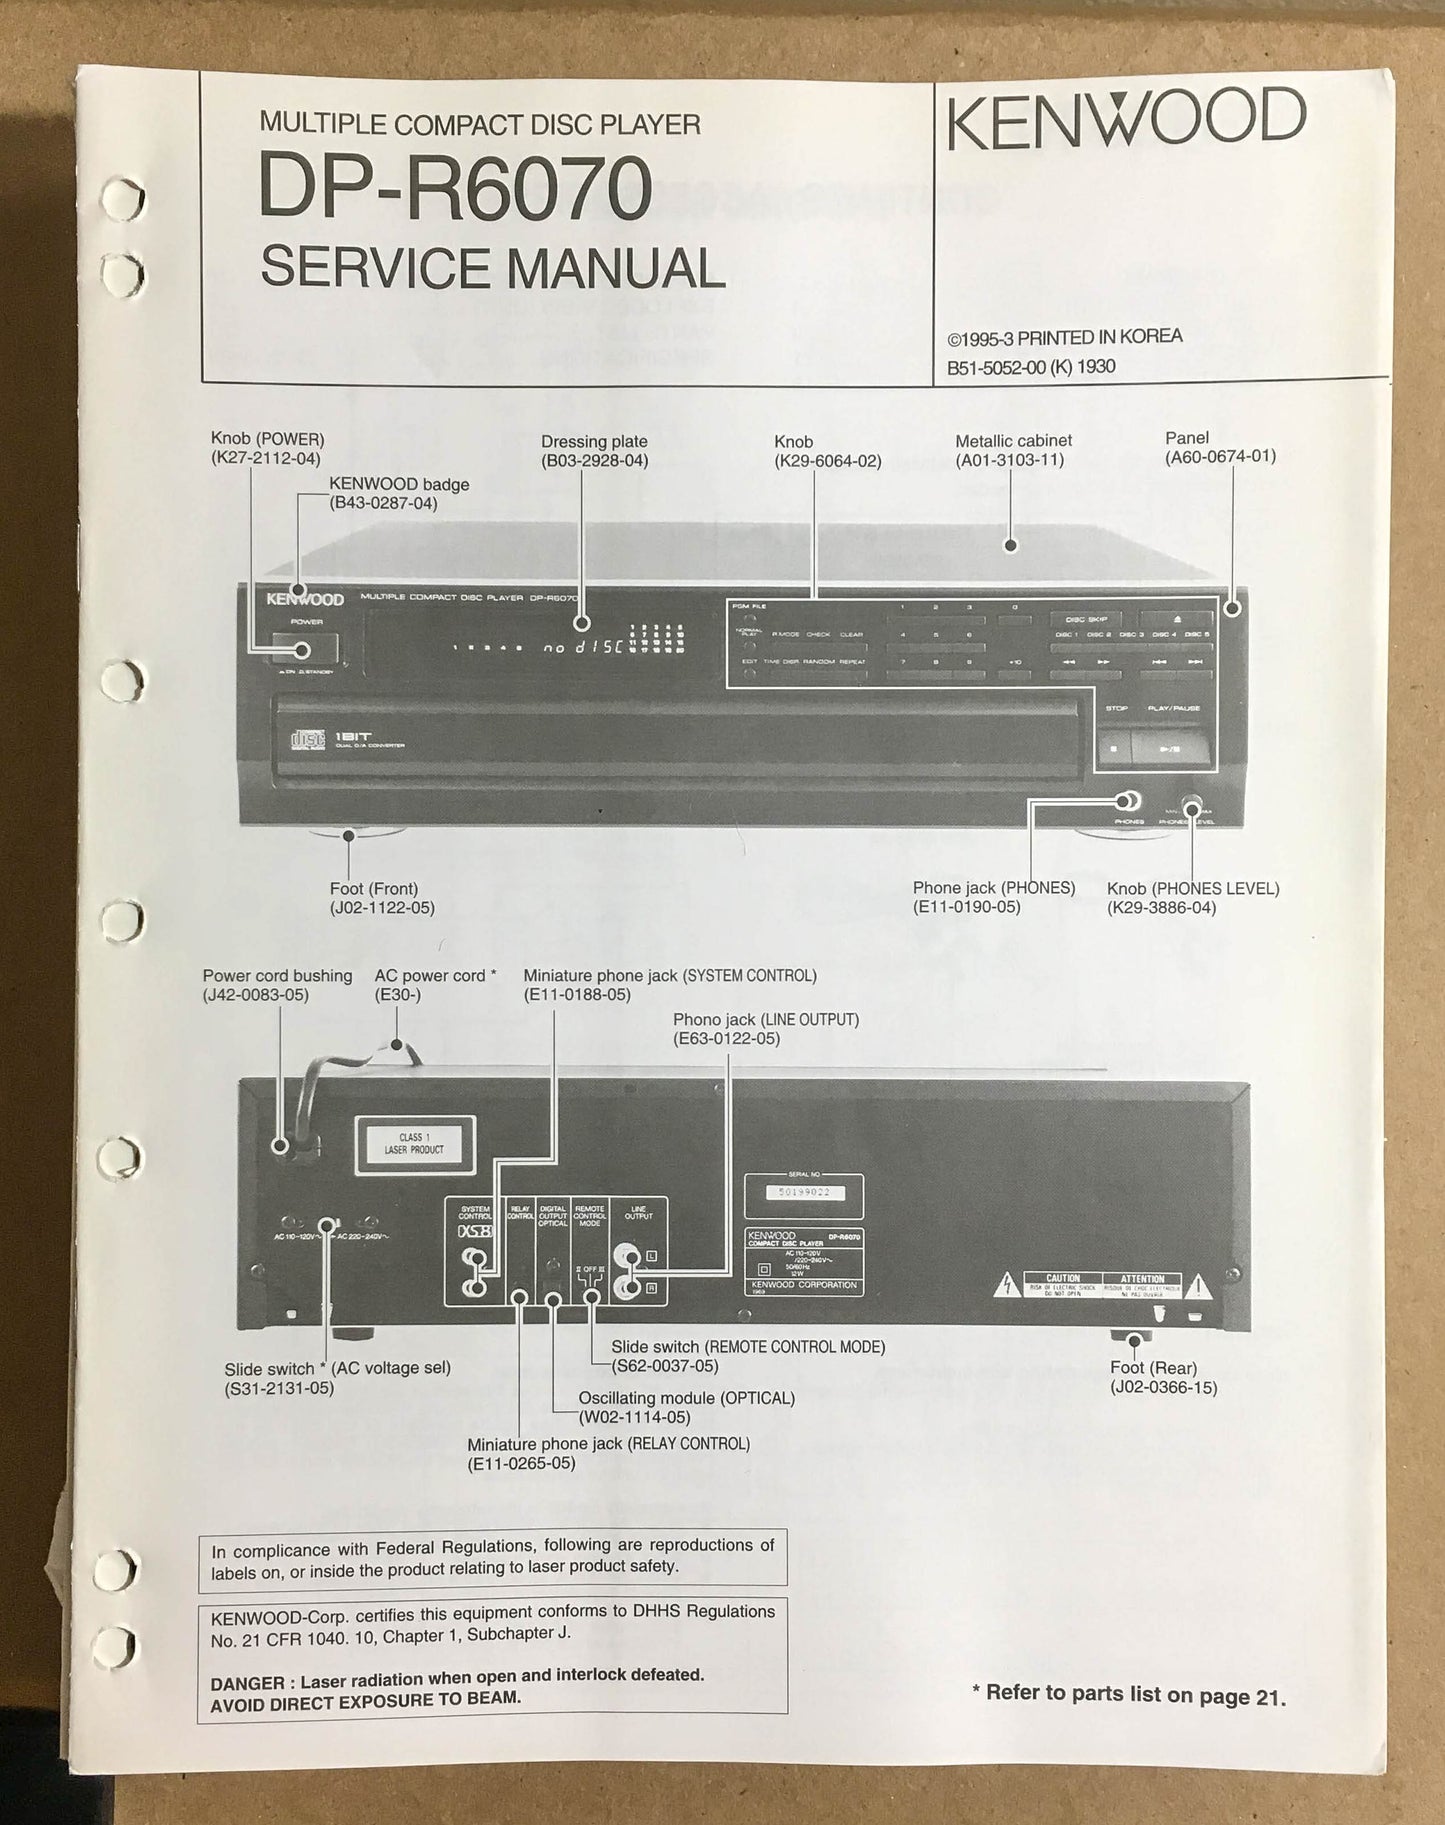 Kenwood DP-R6070 CD Player  Service Manual *Original*